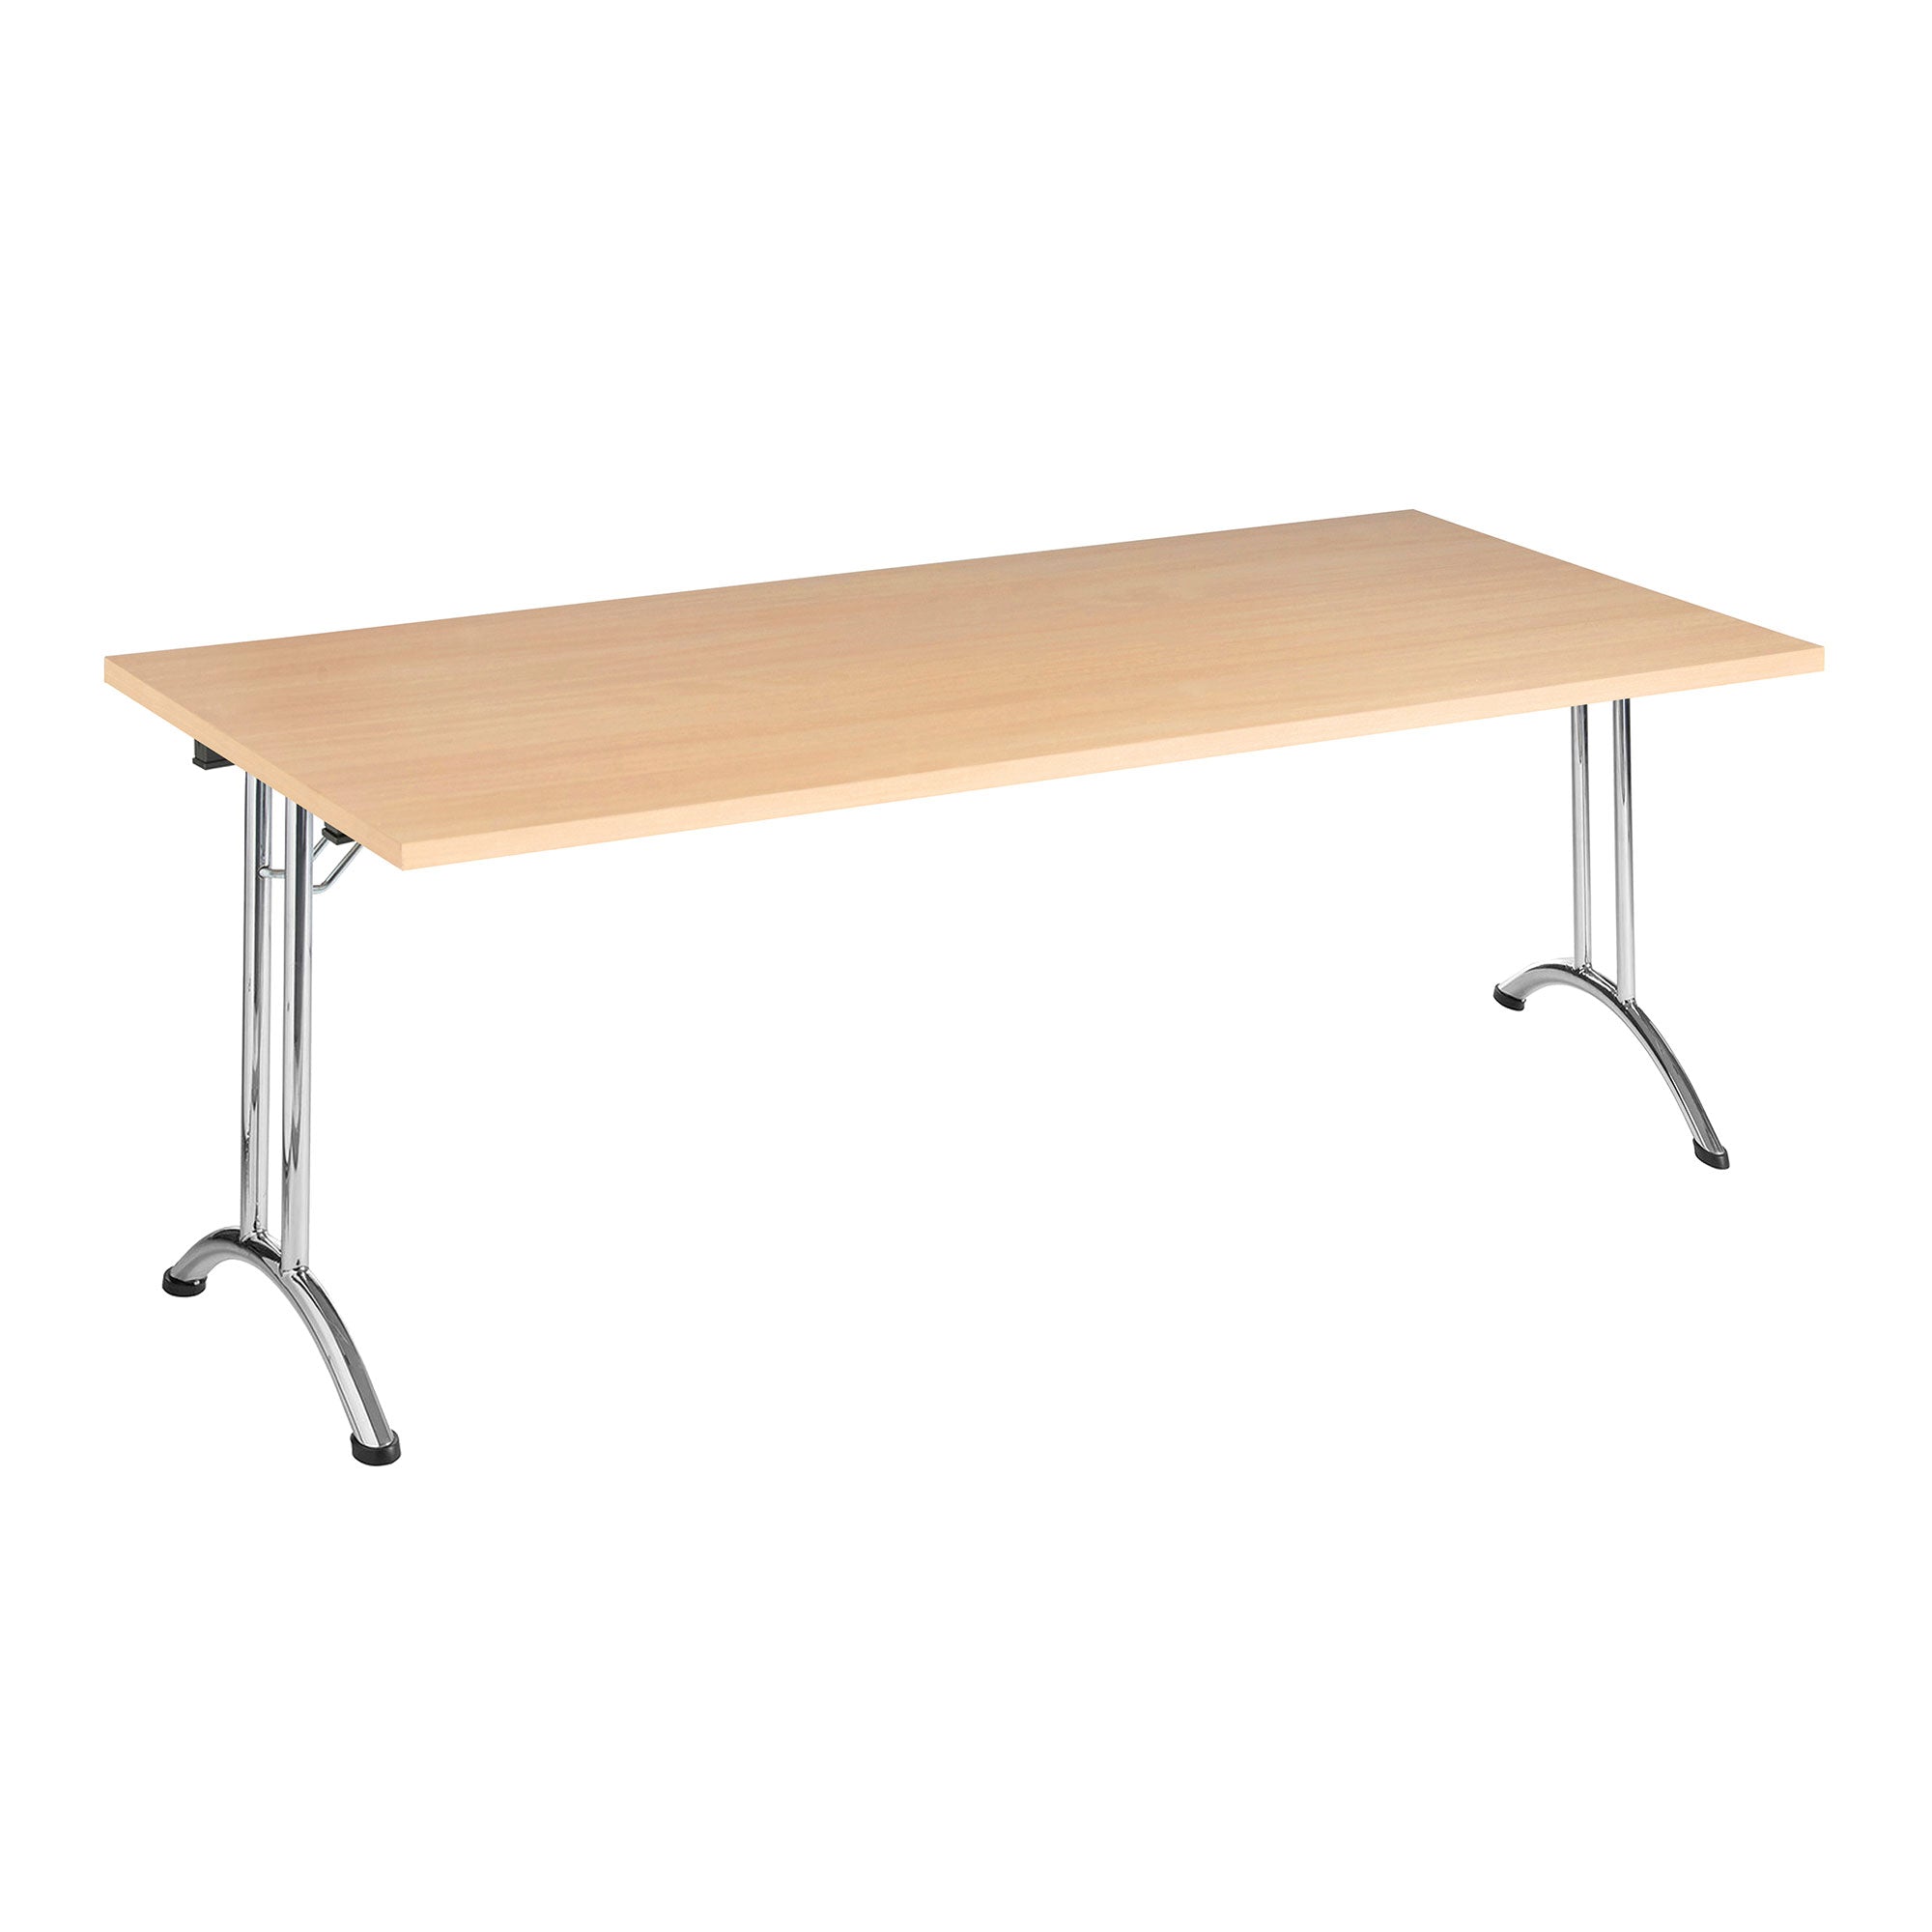 Versa-Table – Rectangular – Wide Modular Table with Folding Tubular Chrome Frame